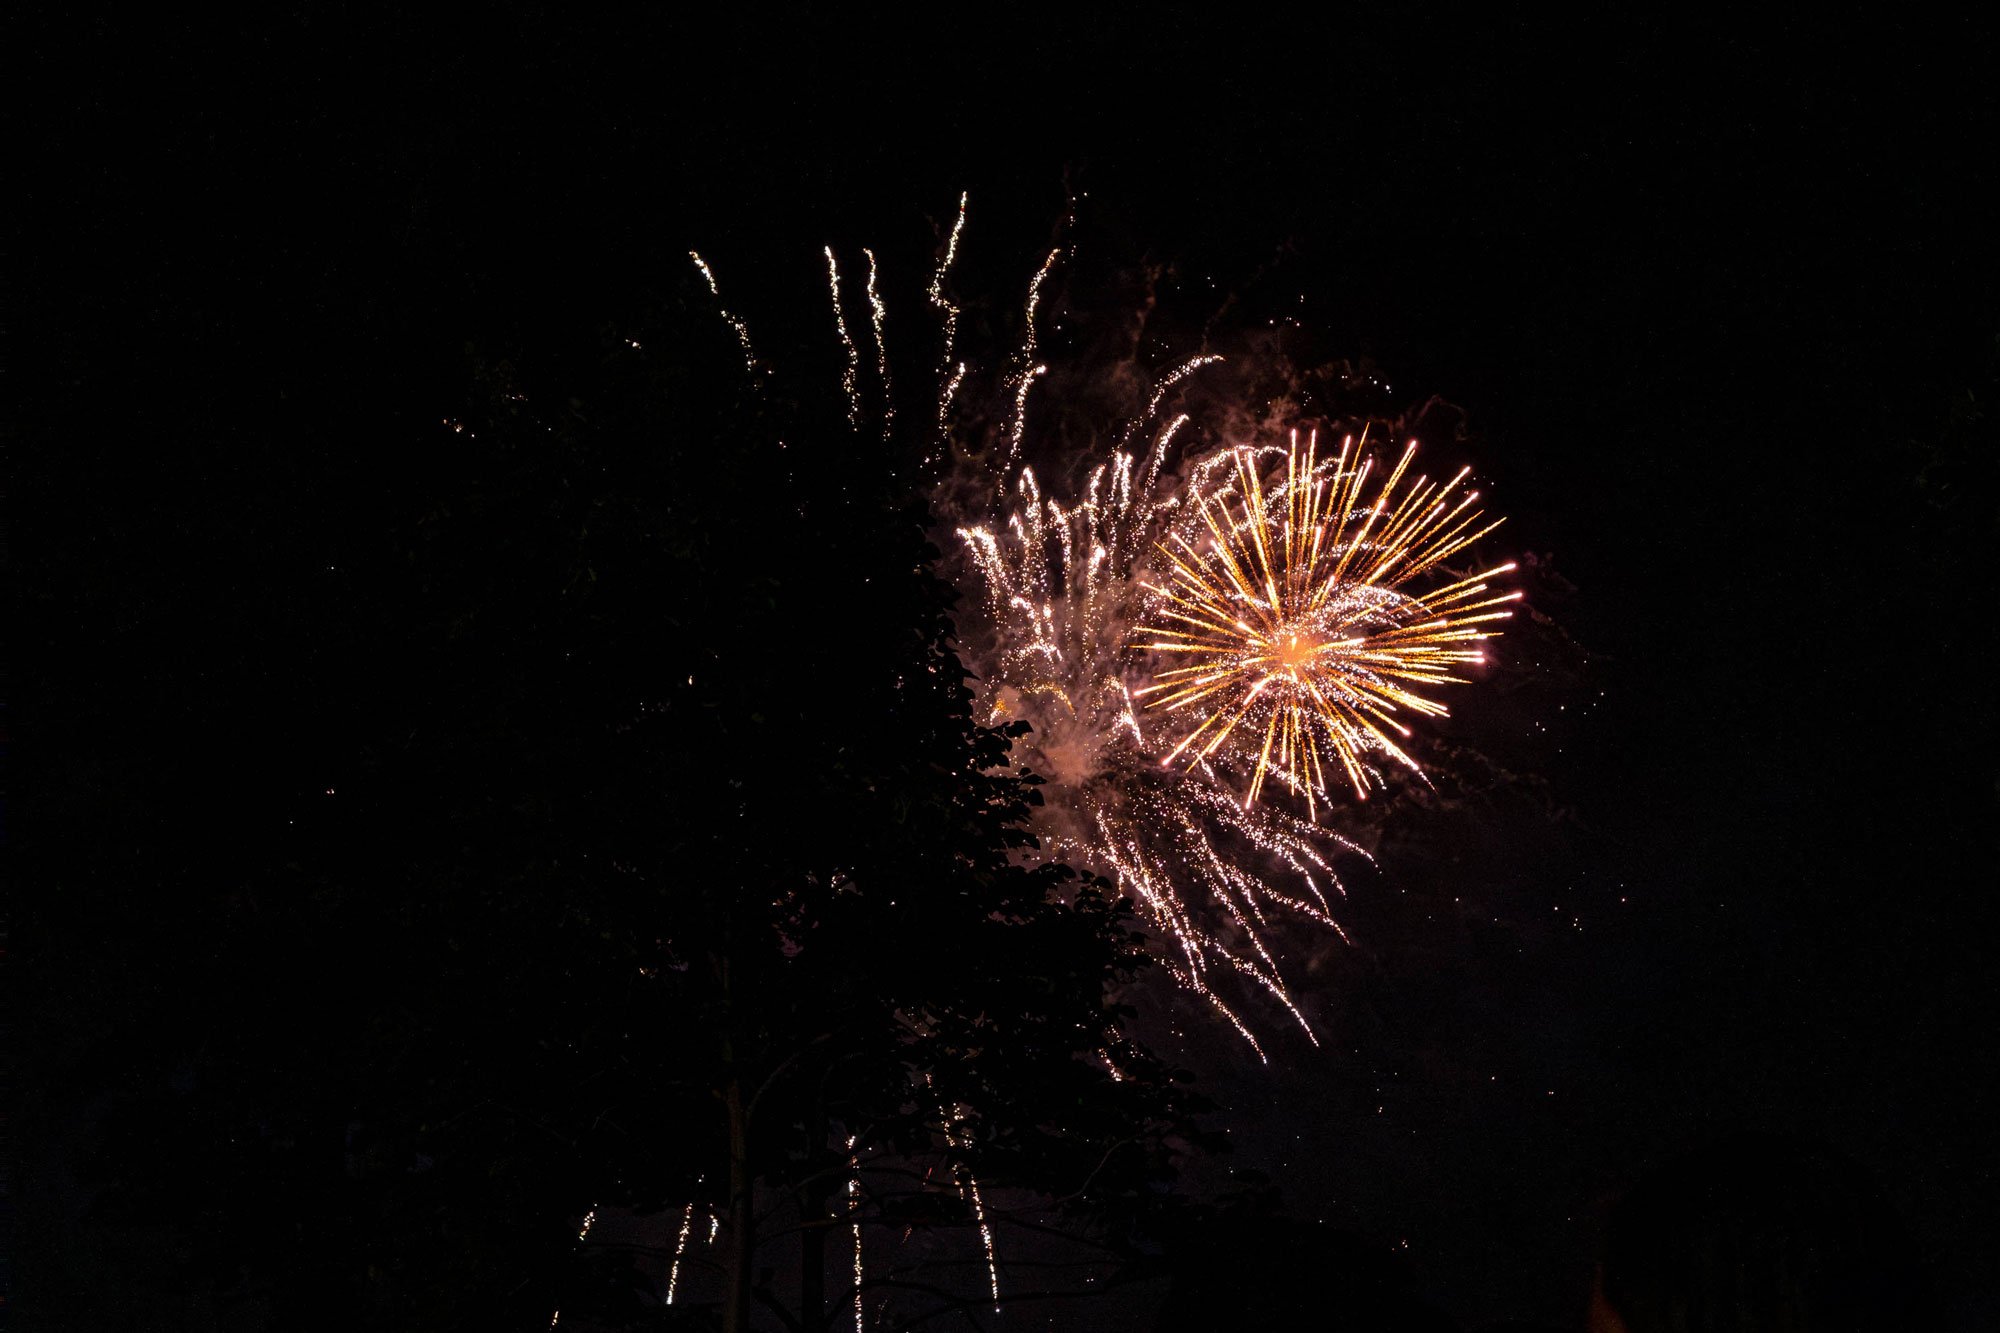 021_street_photo_niagara_falls_orange_fireworks.jpg